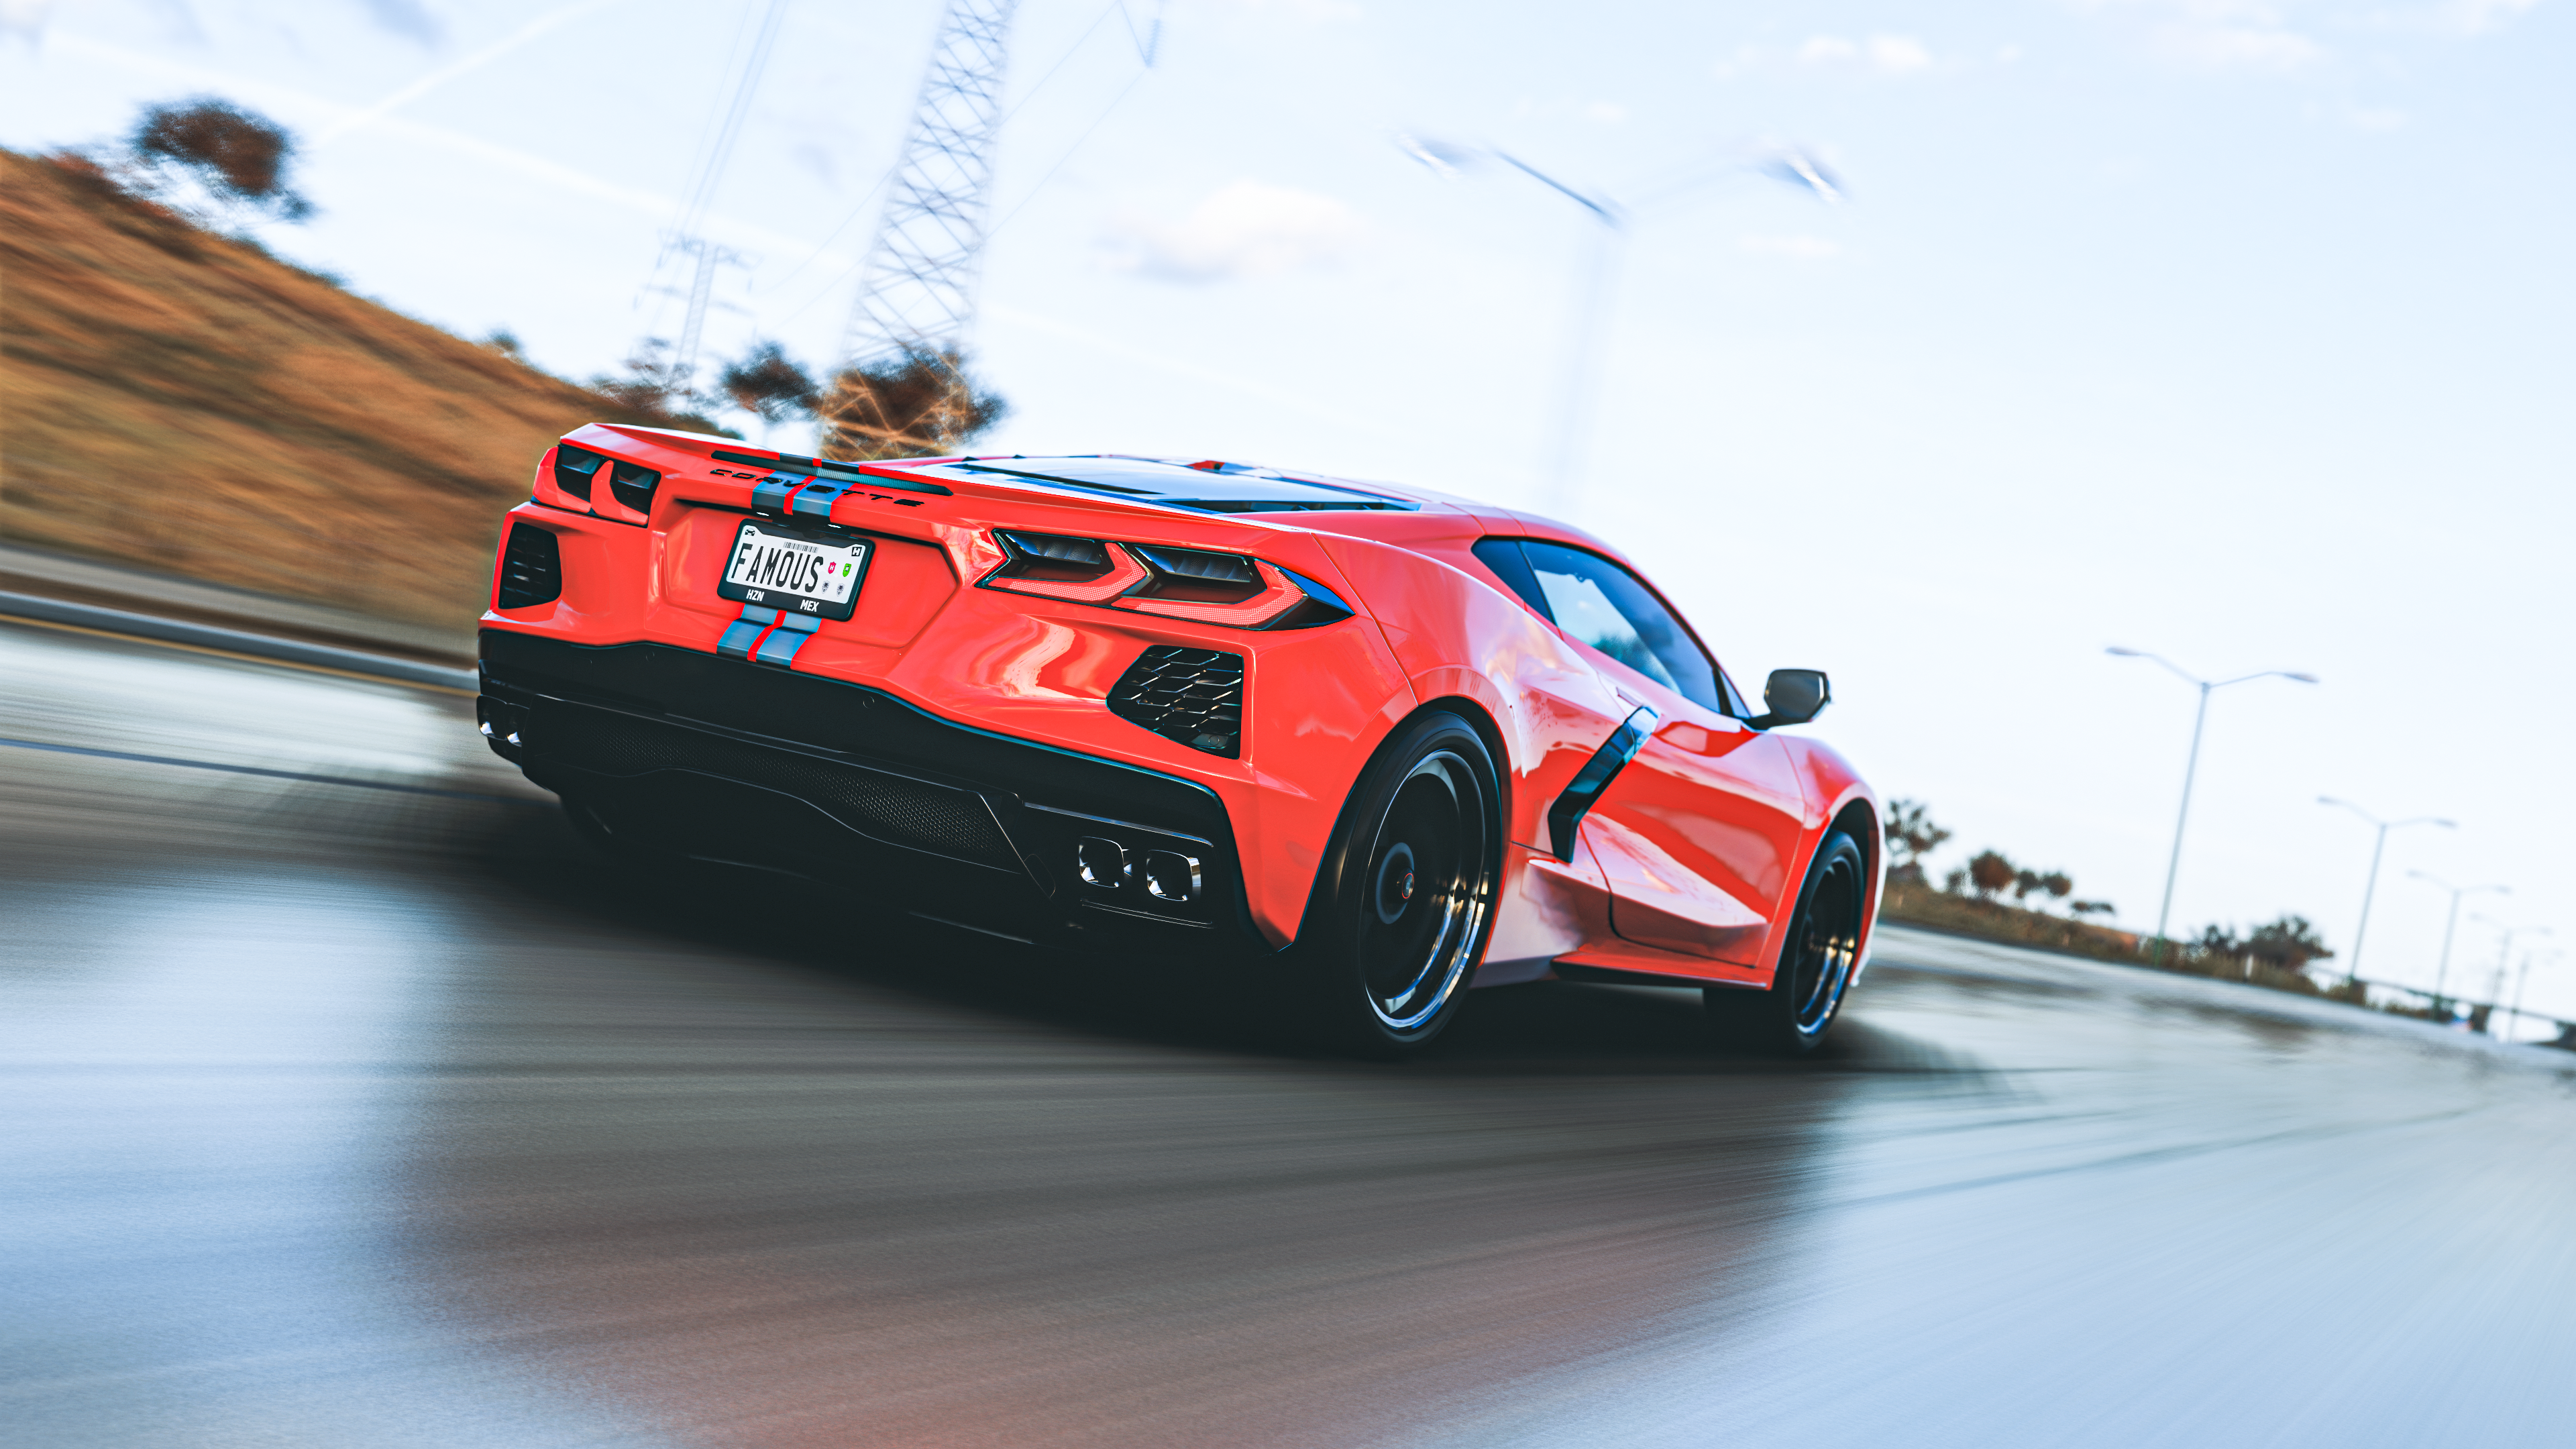 Forza Horizon 5 Nissan GT R Chevrolet Rear View Licence Plates Road Video Games CGi Blurry Backgroun 3840x2160